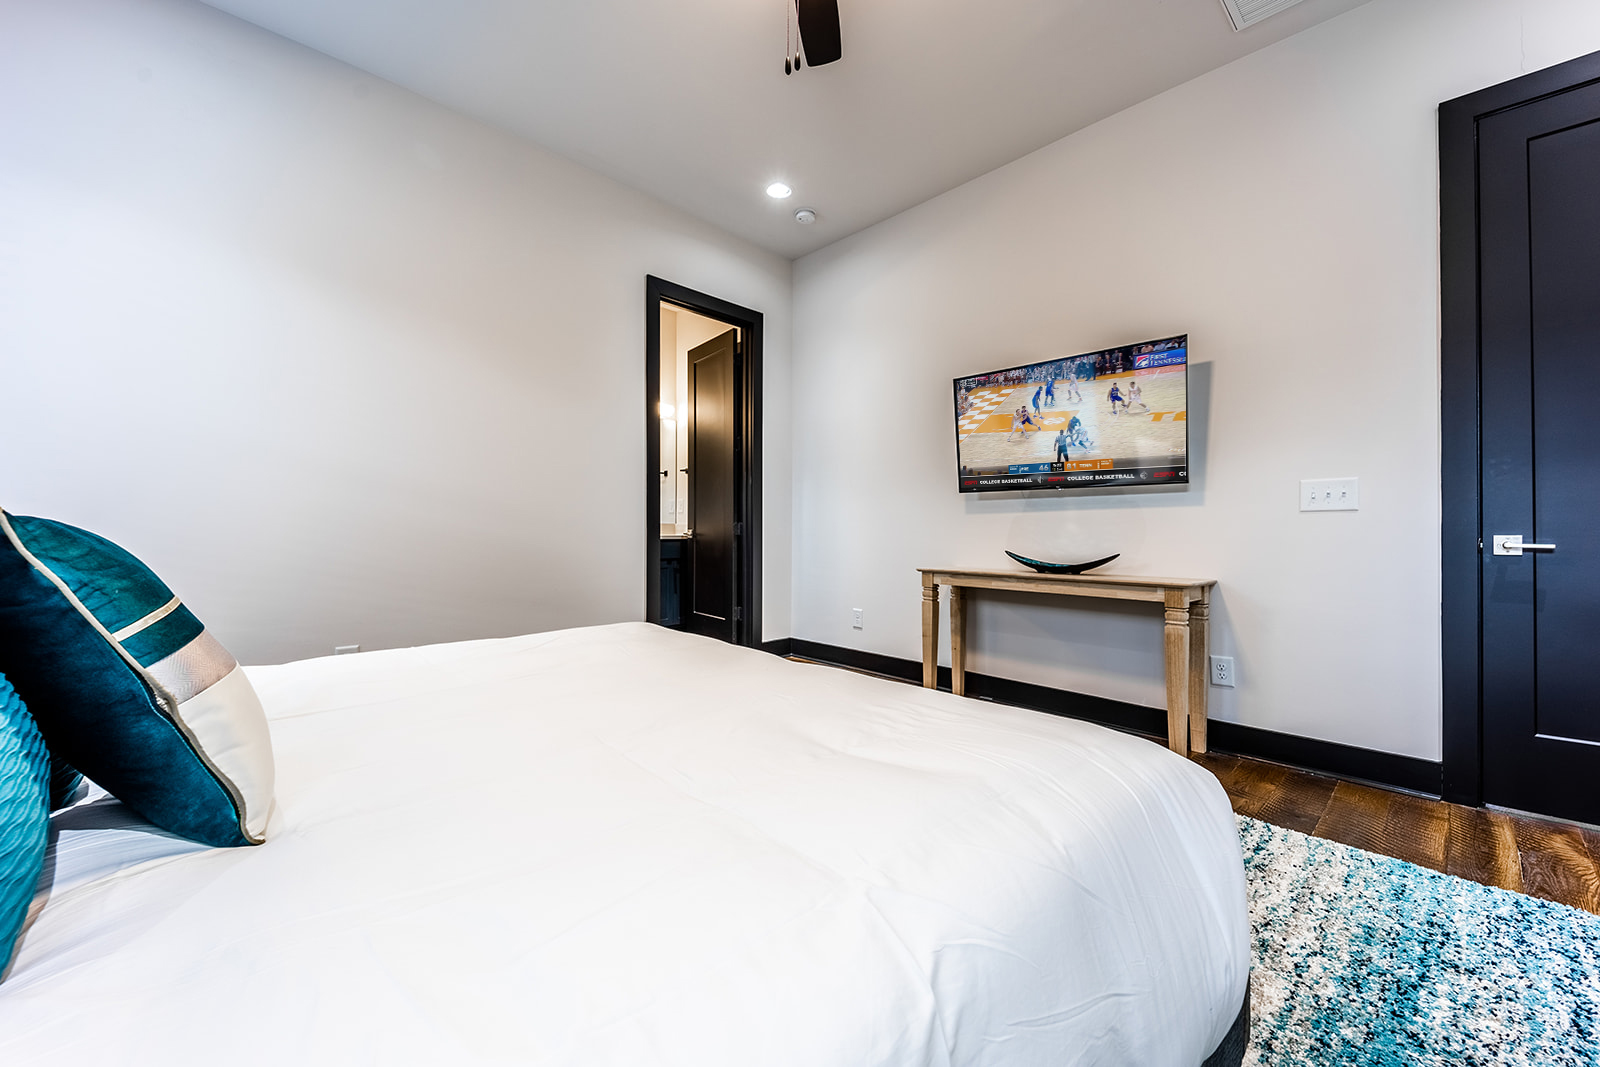 Unit 3: Master Bedroom with King bed, smart TV, and en-suite bathroom.